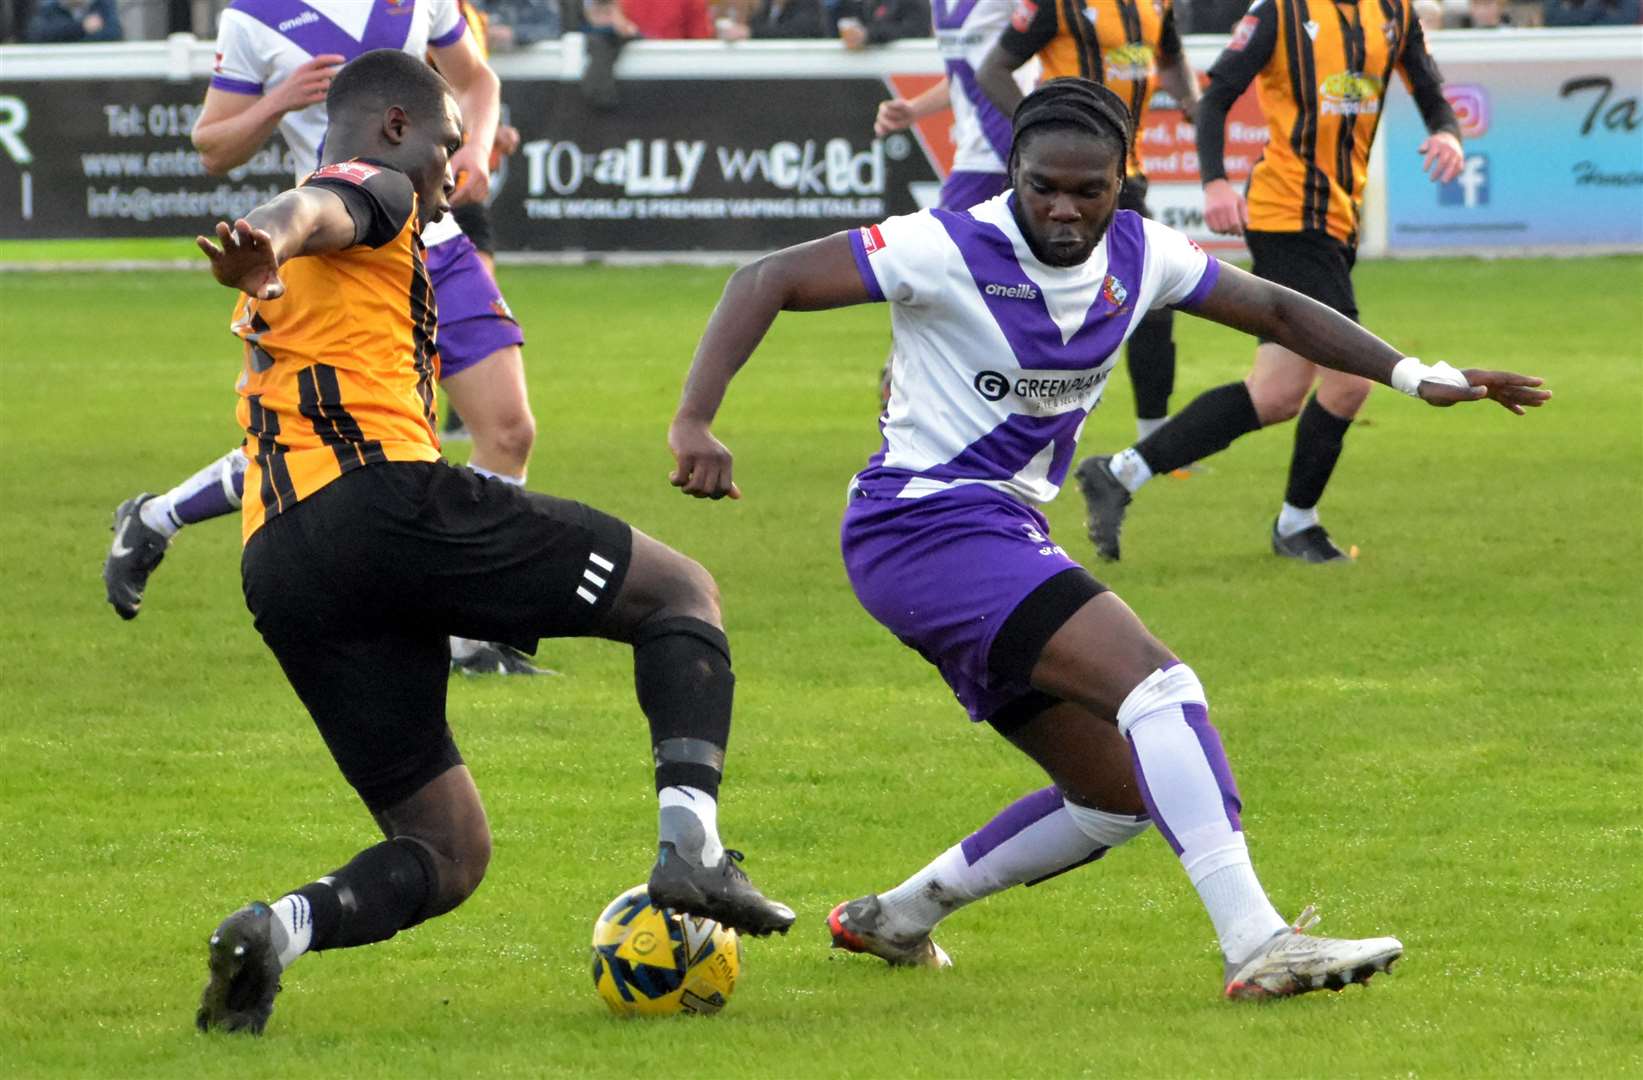 Two-goal hitman Ade Yusuff on the attack. Picture: Randolph File